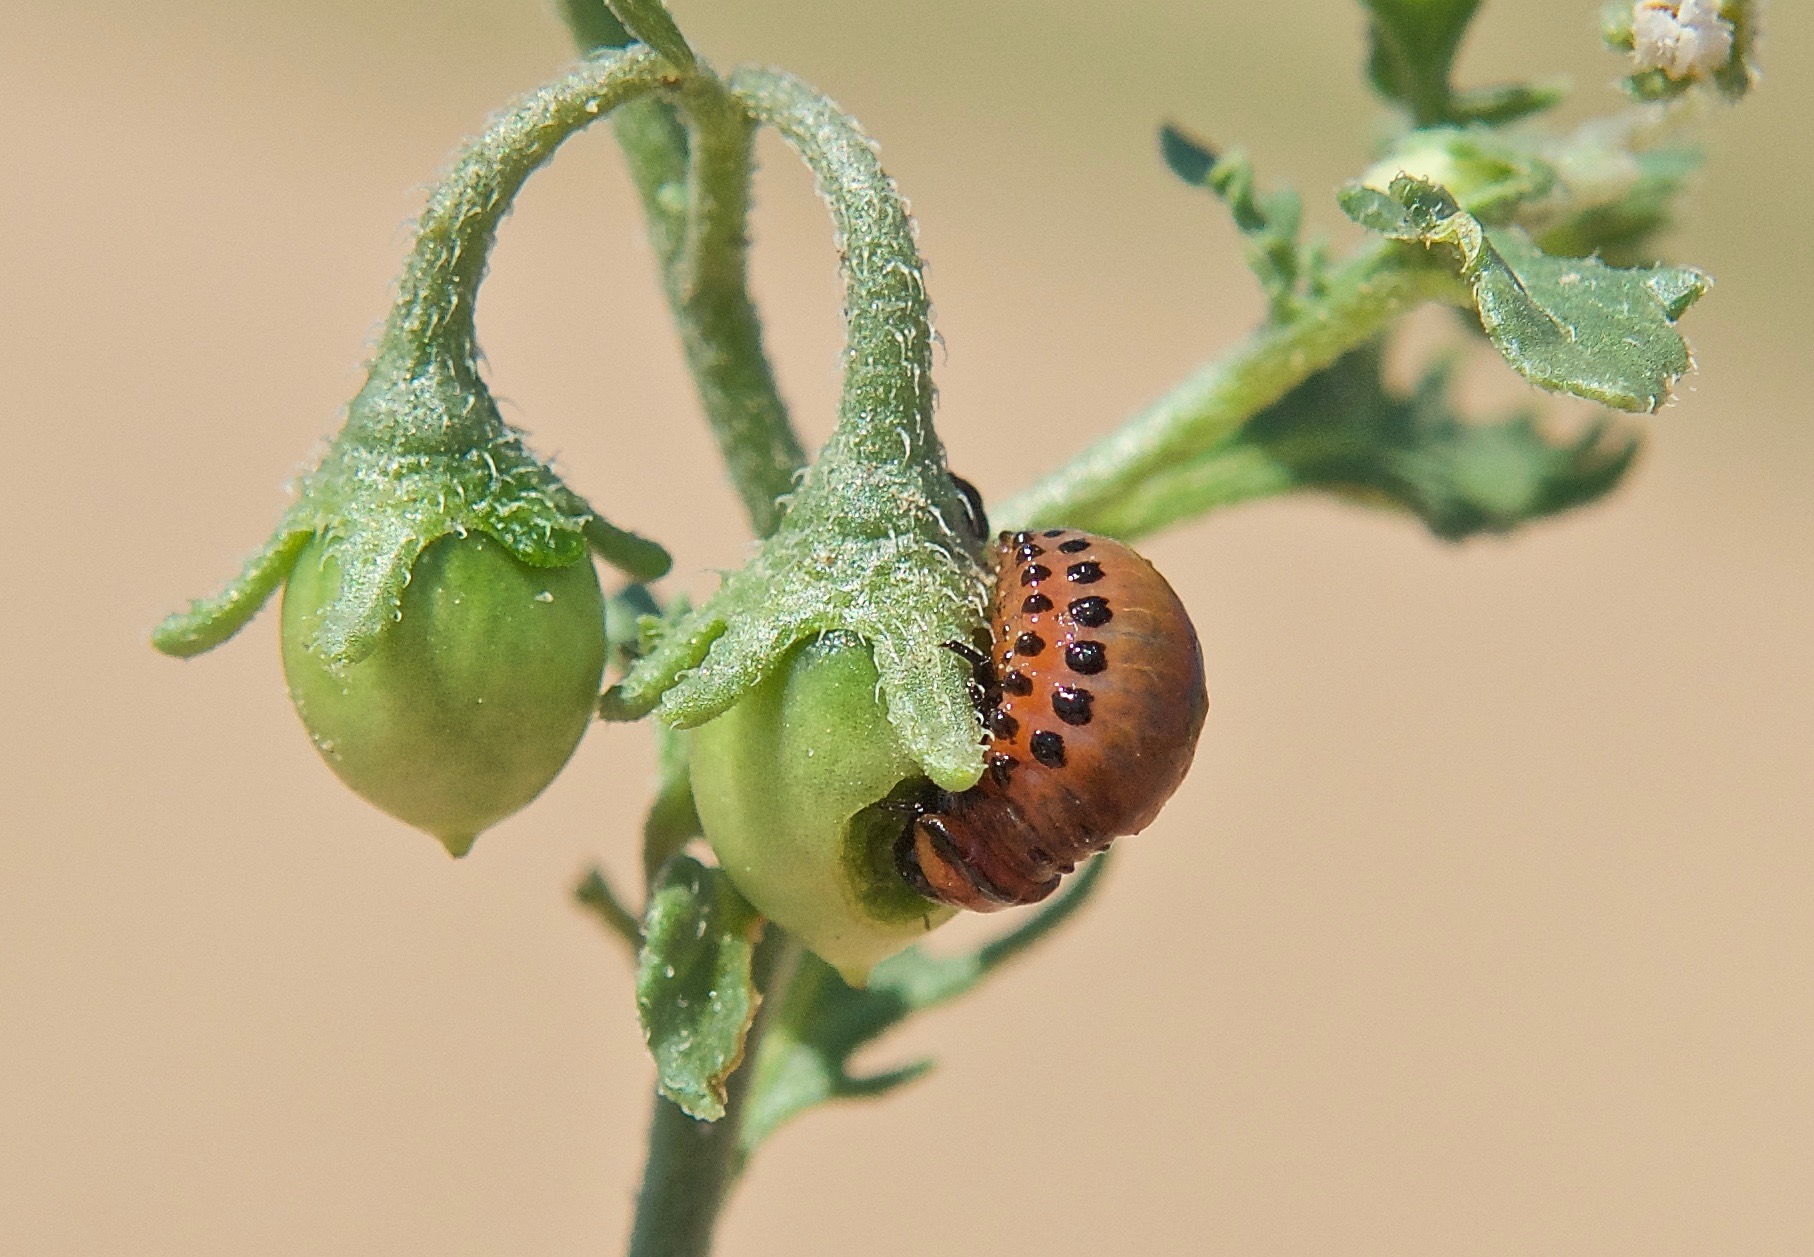 Colorado Potato Bug Larva on Cutleaf Nightshade